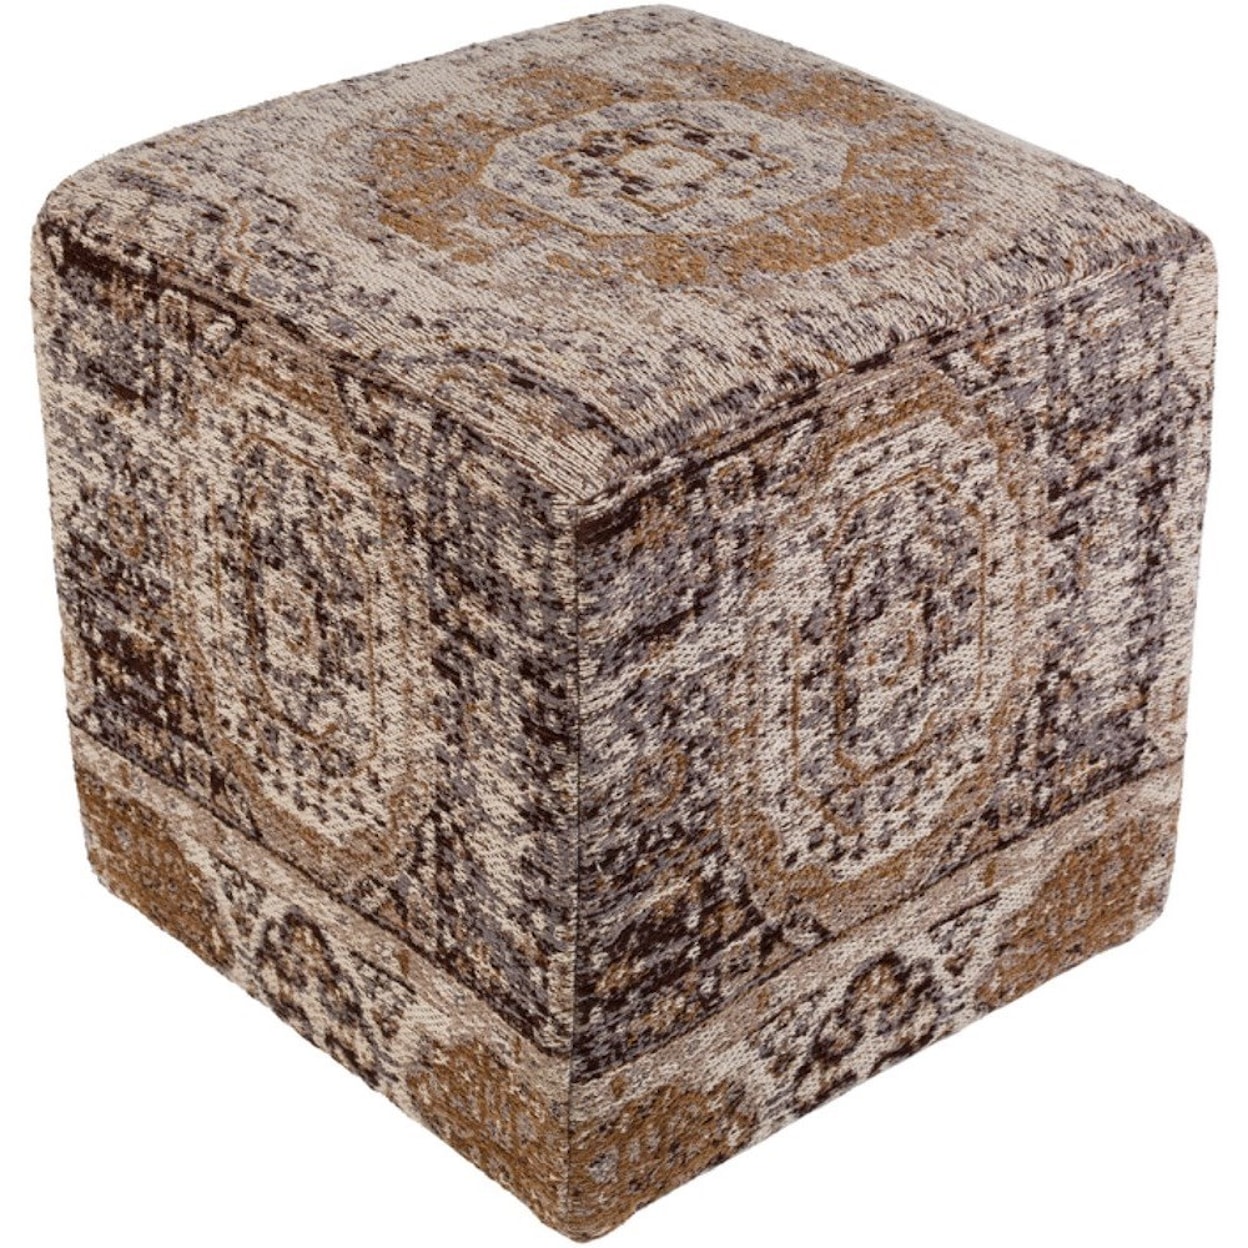 Surya Amsterdam Cube Pouf